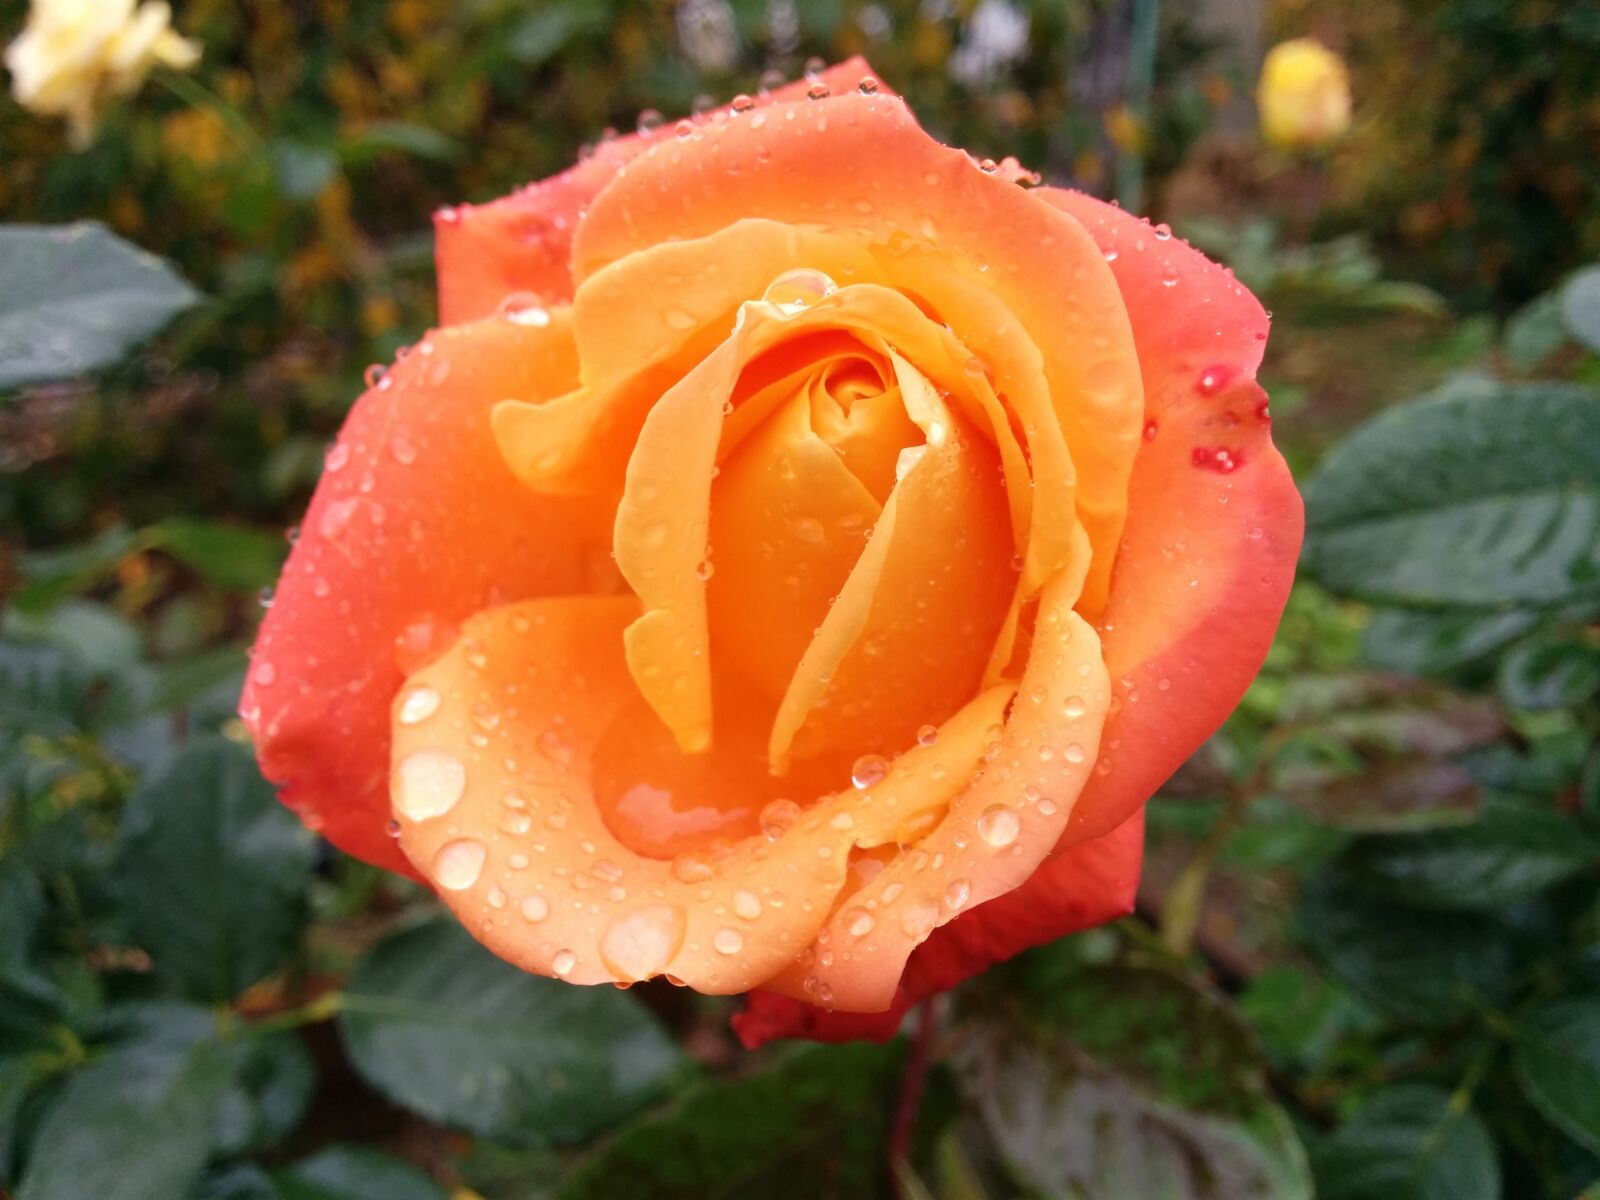 LG Nexus 5 sample photo. Nature, garden, flower photography